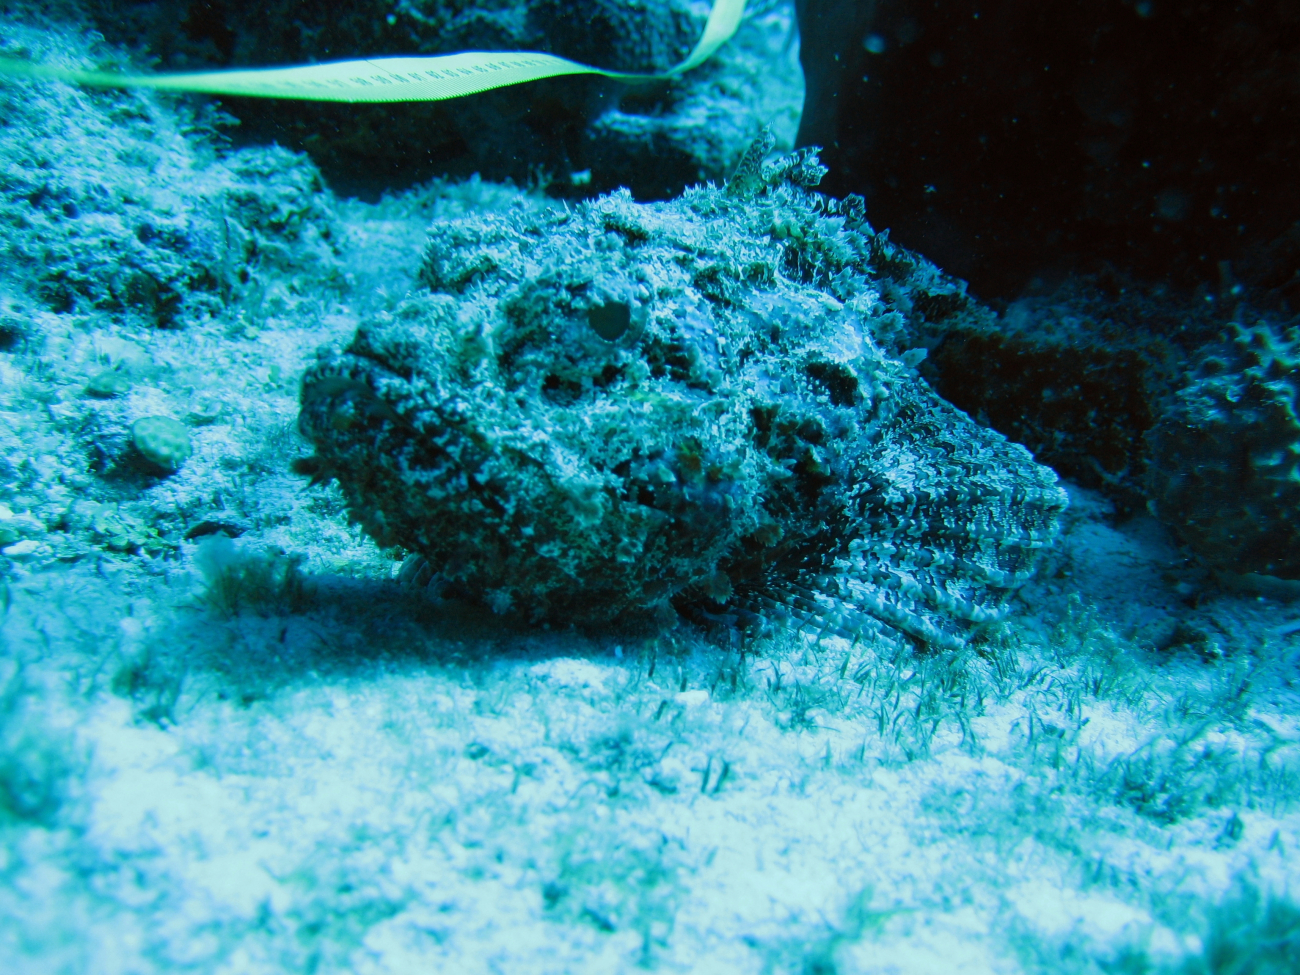 Spotted scorpionfish (Scorpaena plumieri)